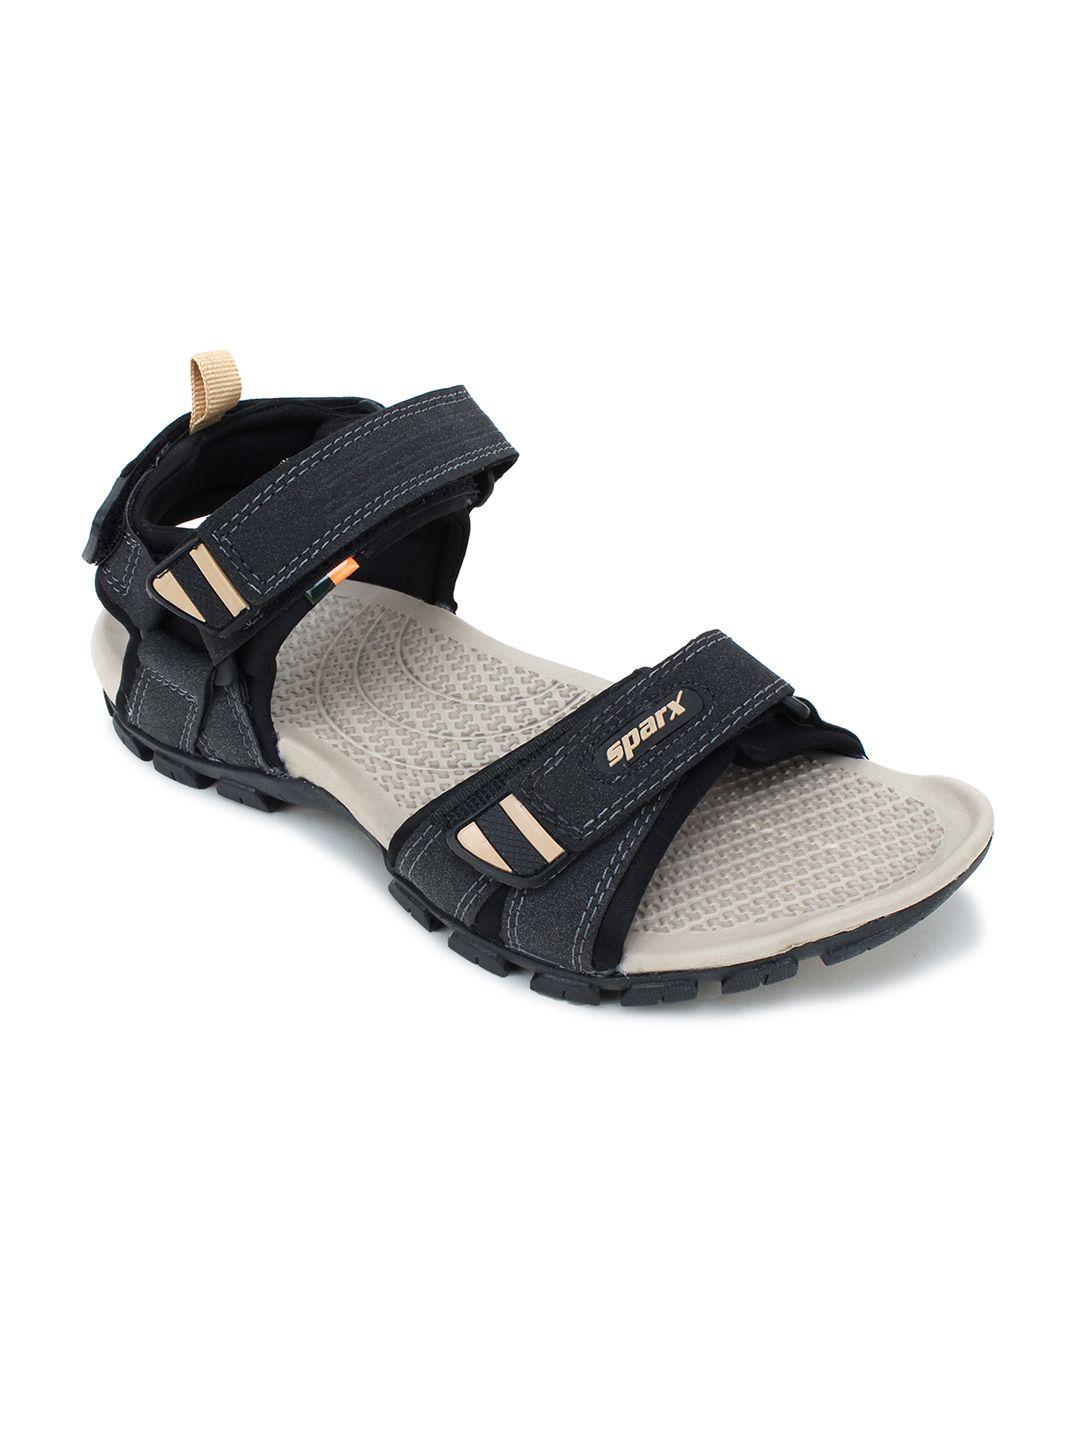 Sparx Men SS-481 Black and Beige Sports  Sandals